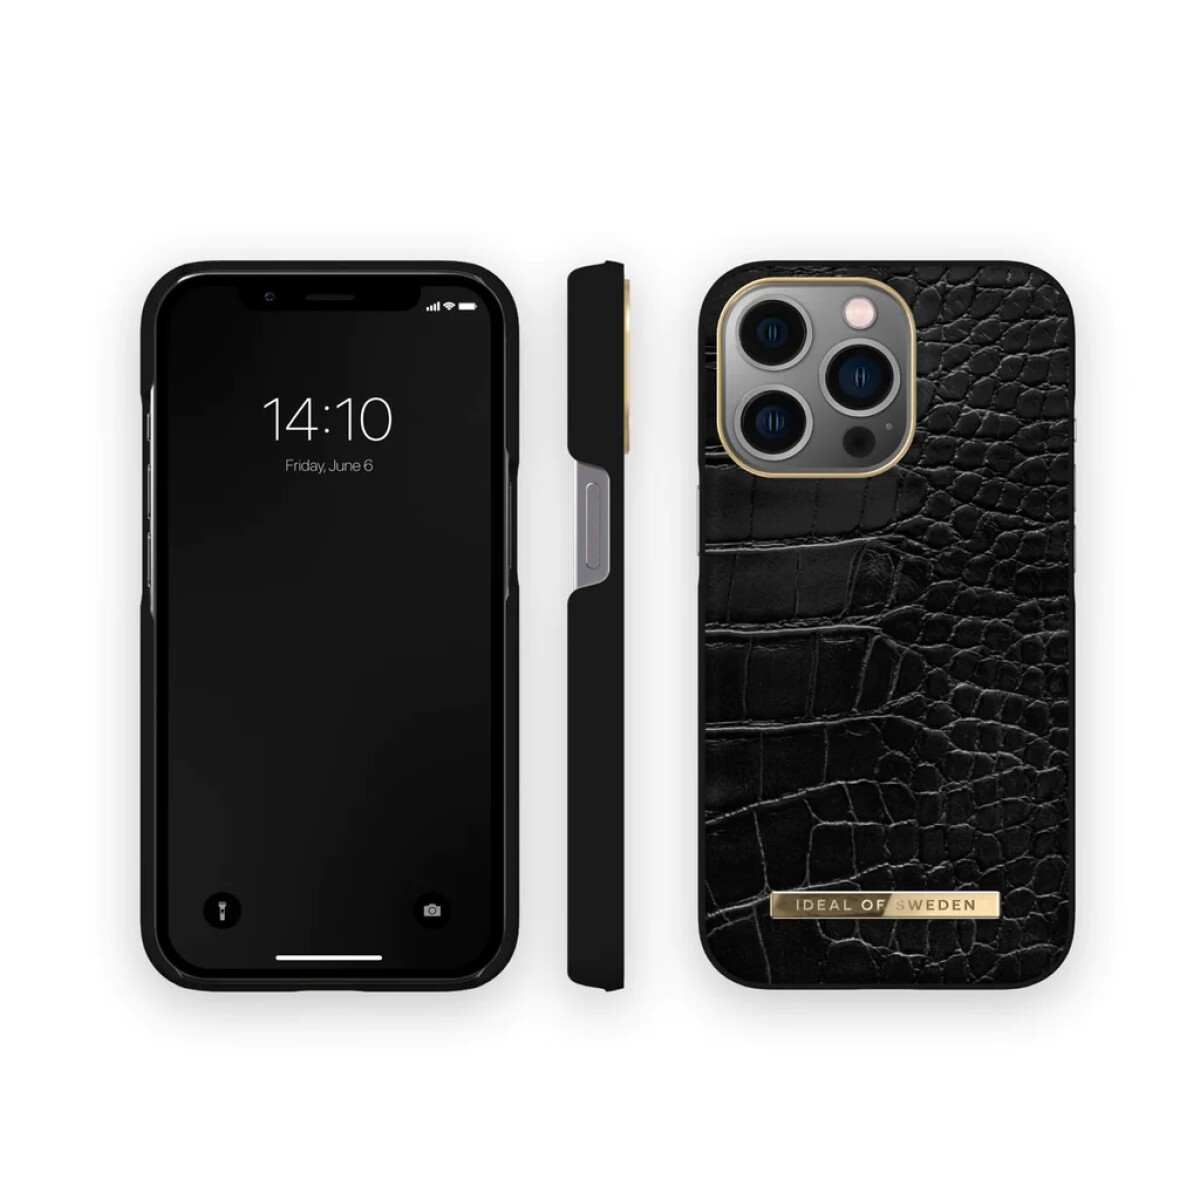 Protector Atelier Case Ideal of Sweden para iPhone 14 Pro Max Neo noir croco